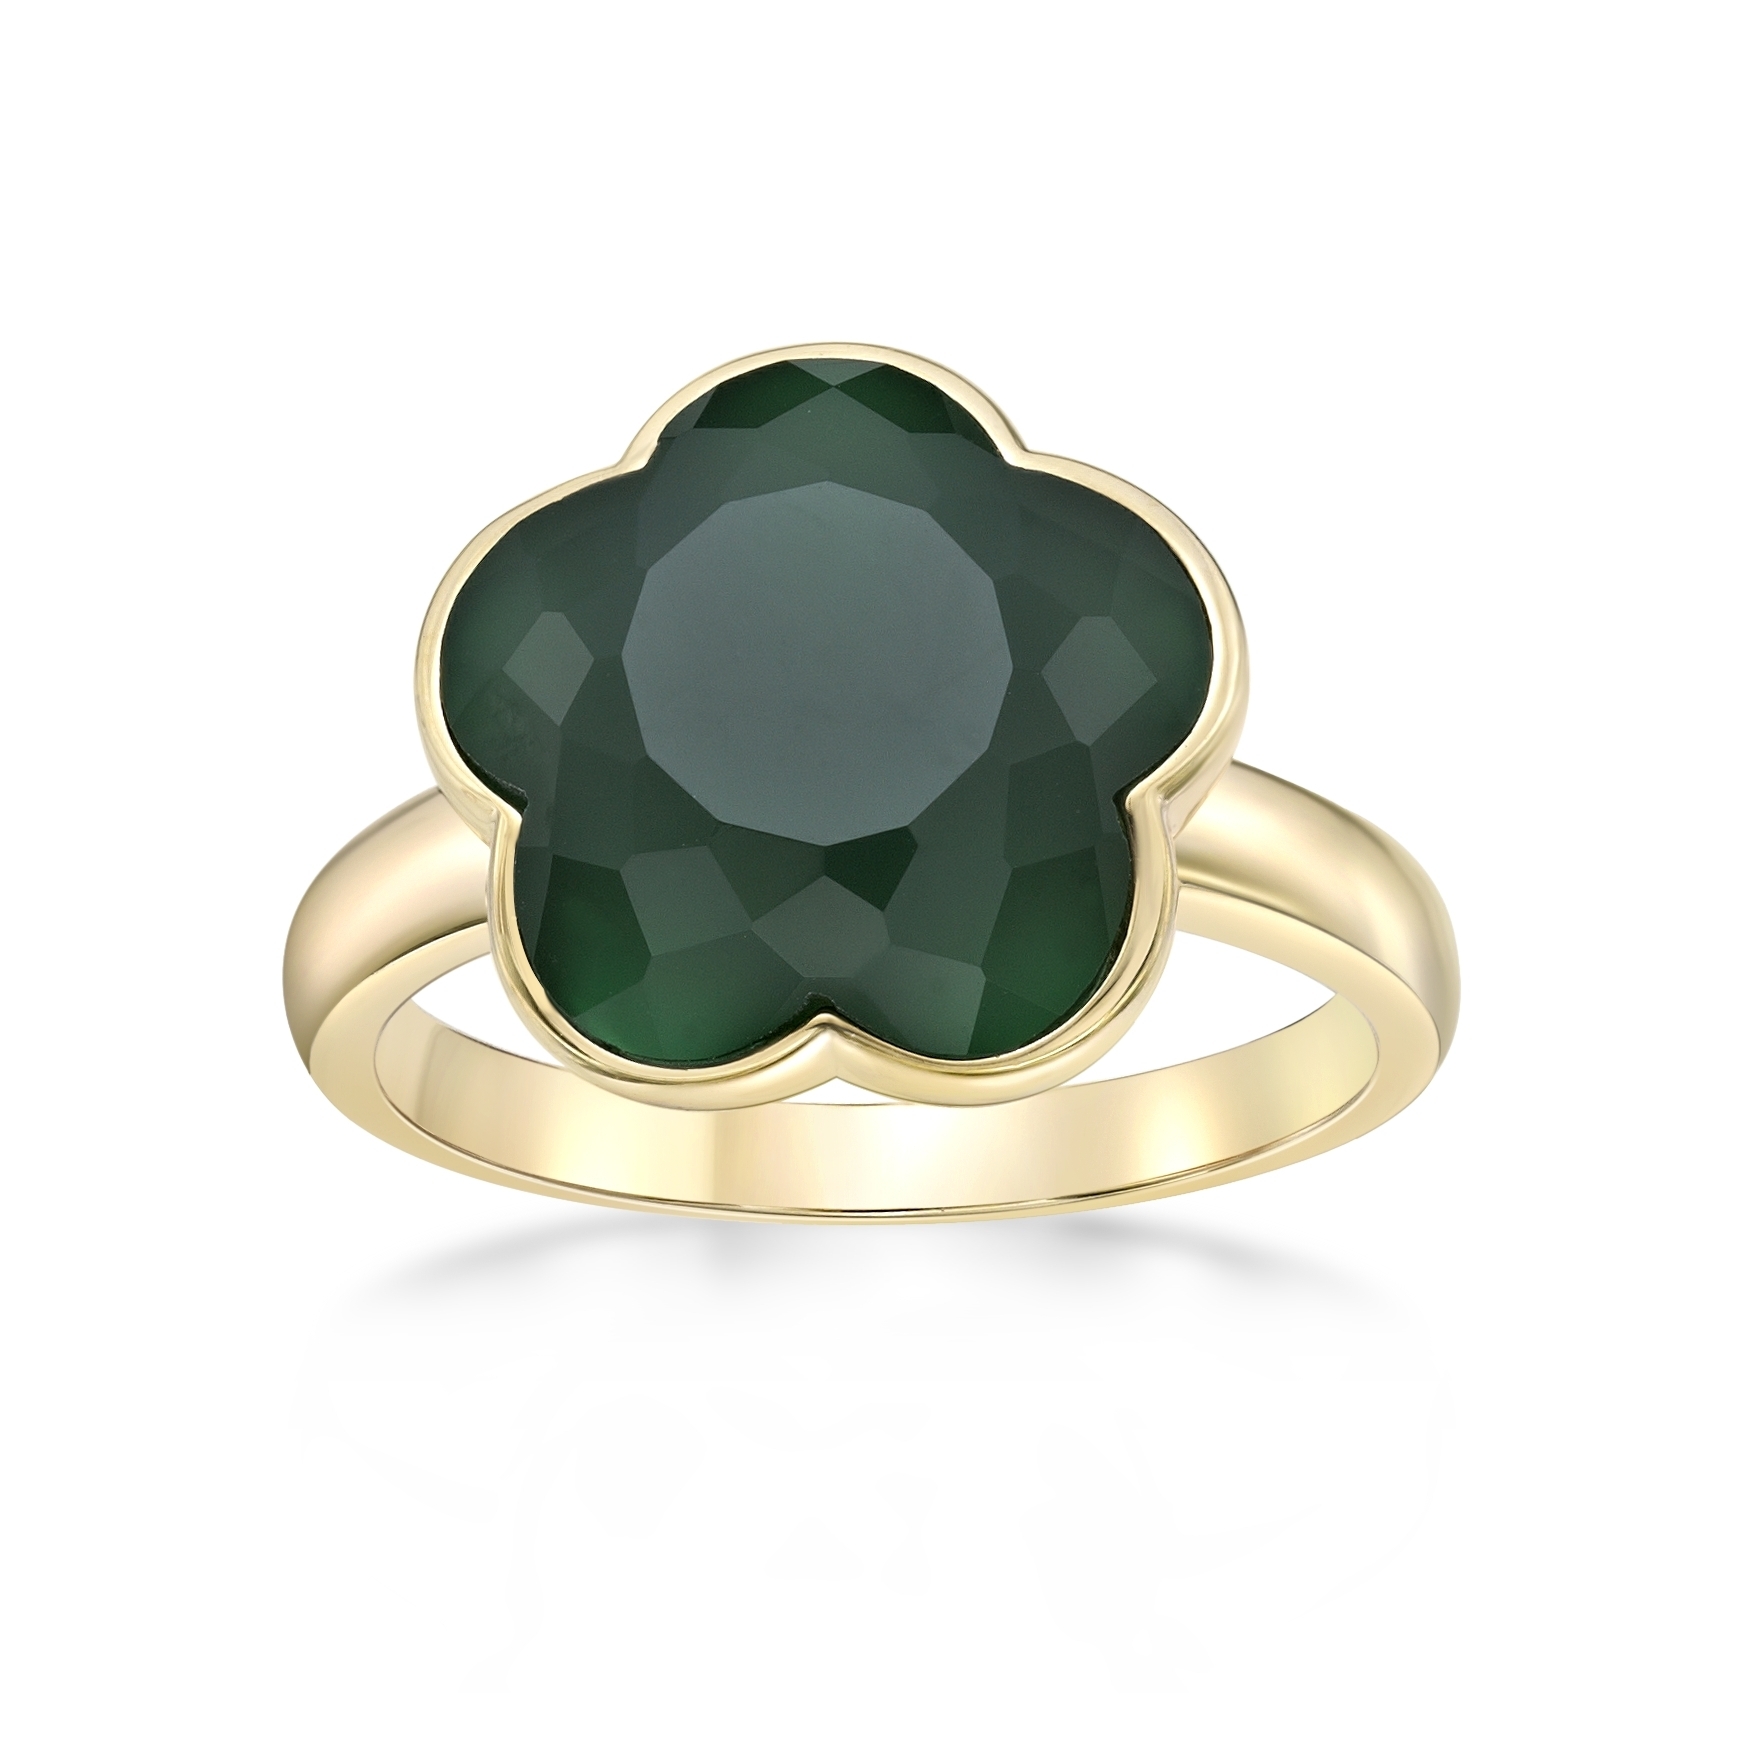 Lavari Jewelers Women’s Green Onyx Five Petal Flower Ring, 925 Sterling Silver, Size 8